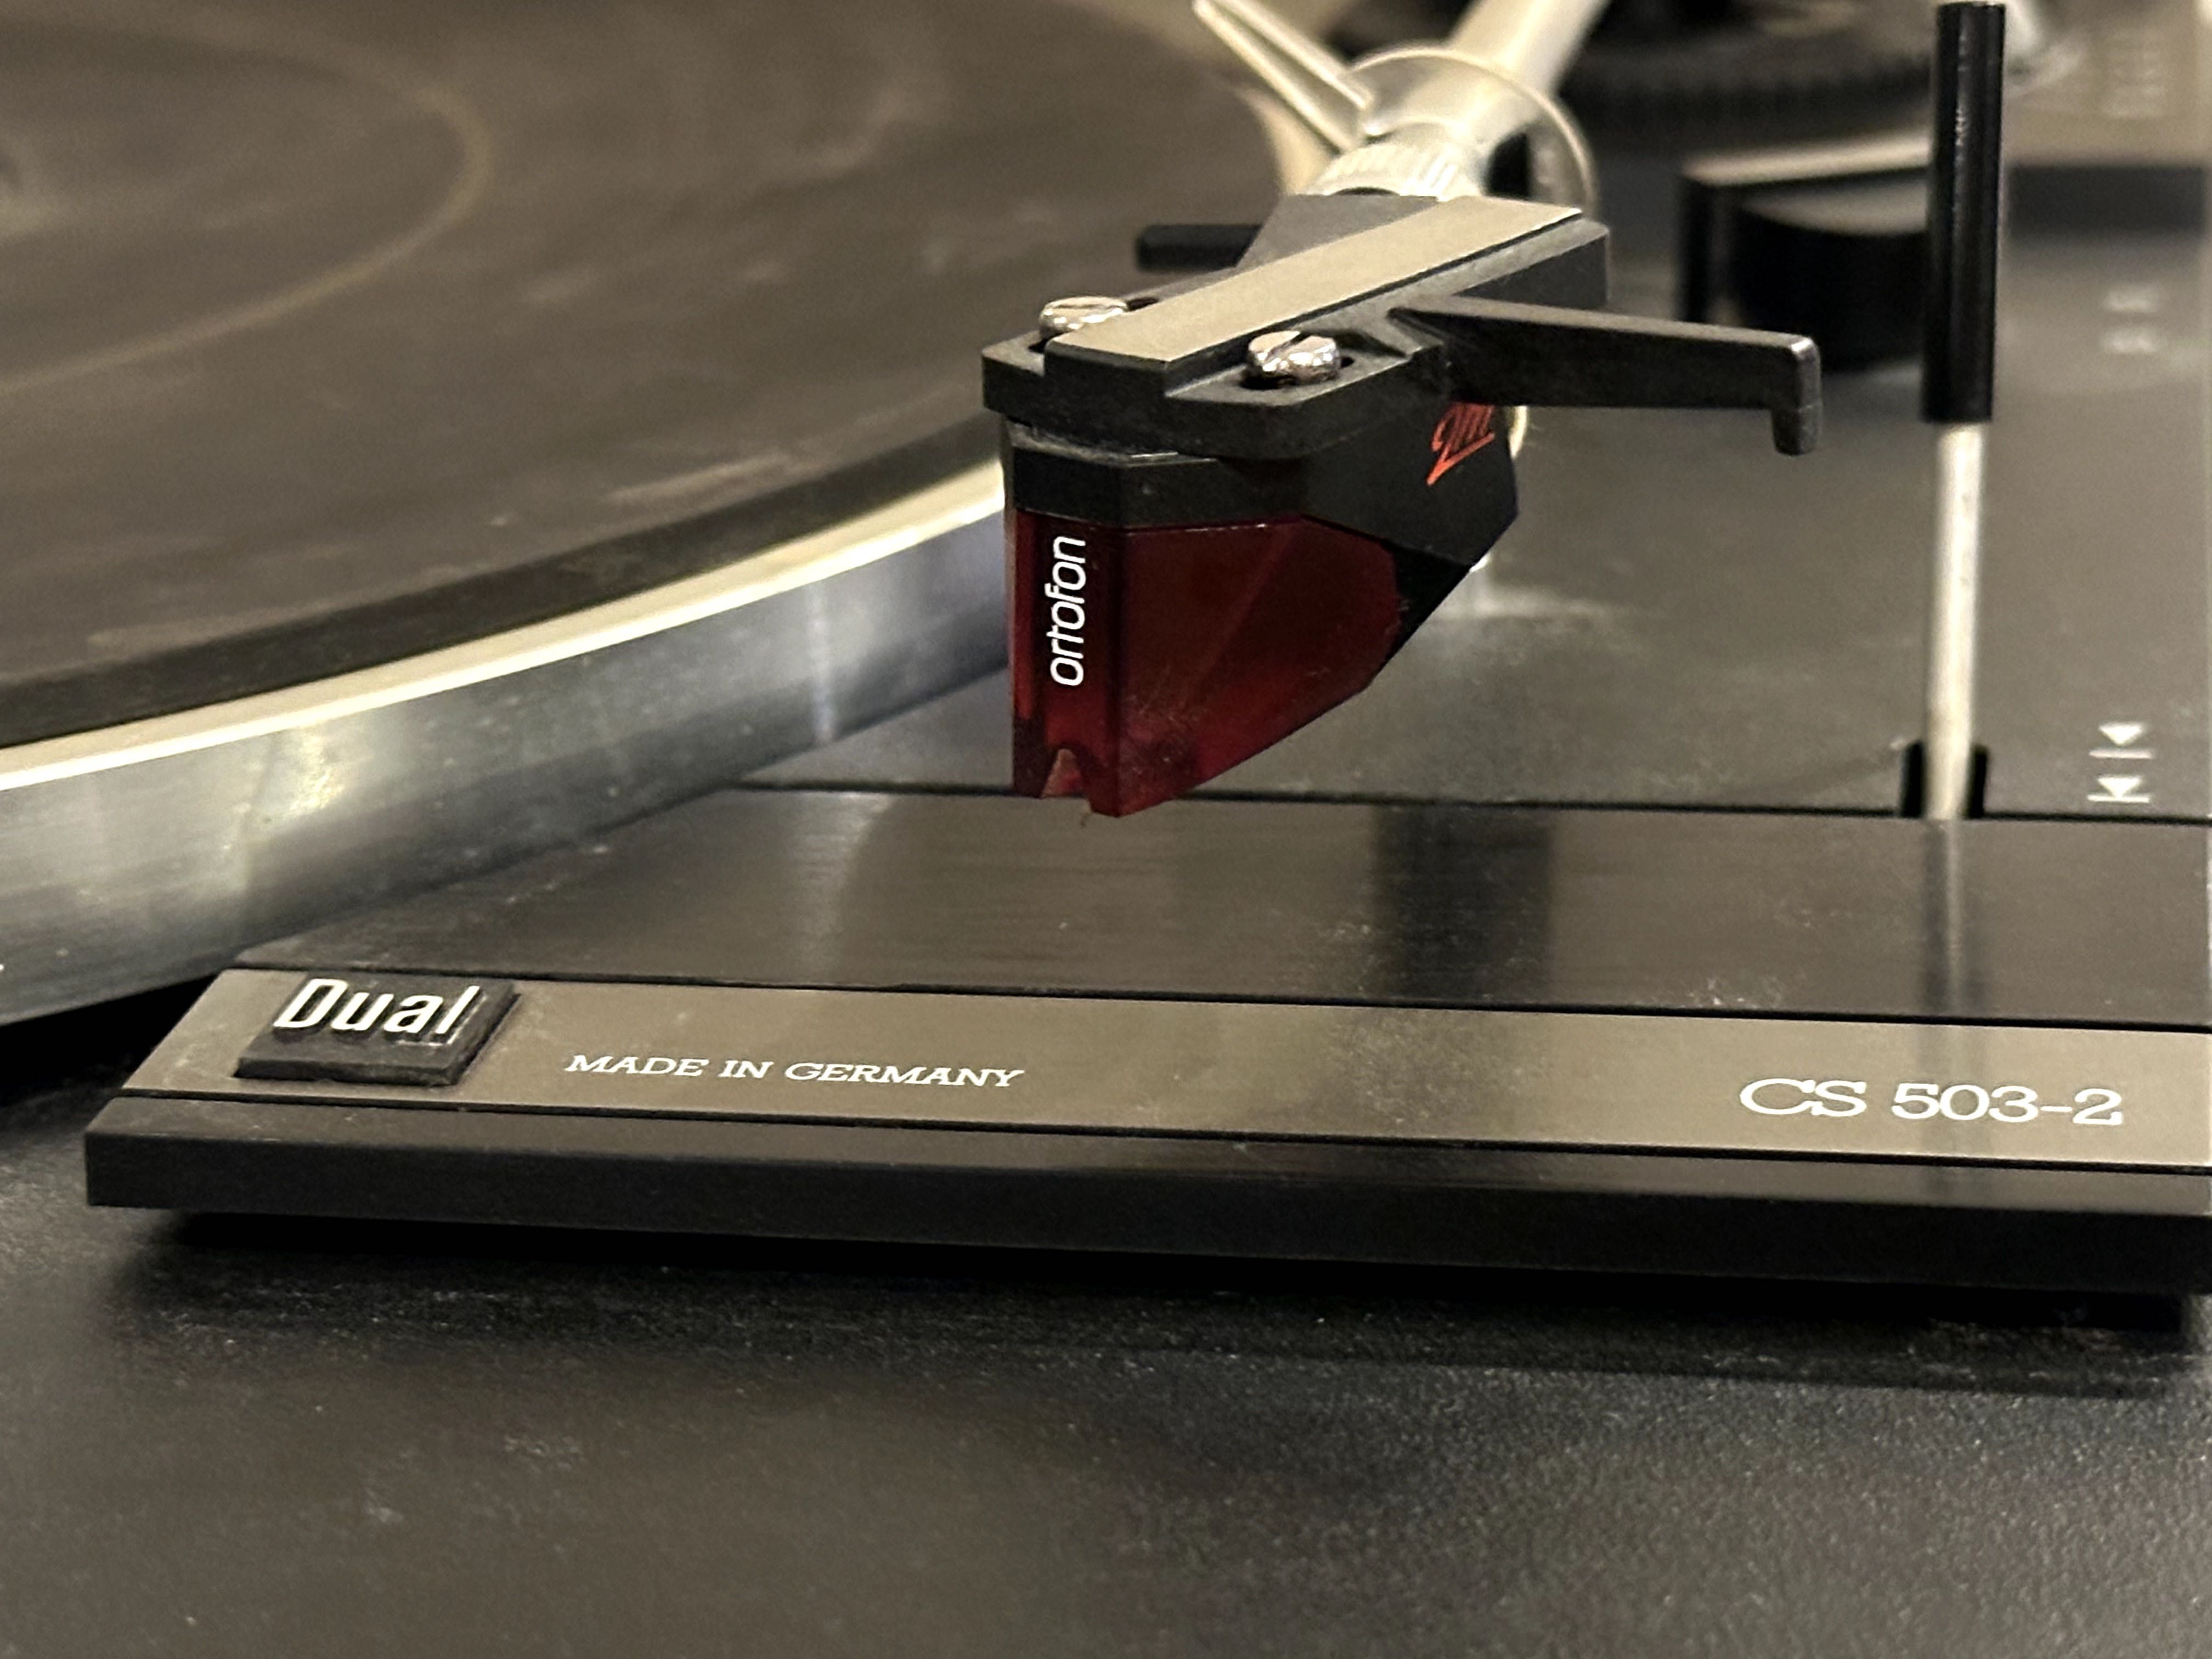 Gramofon DUAL CS 503-2 Audiophile Concept z wkładką Ortofon 2M Red